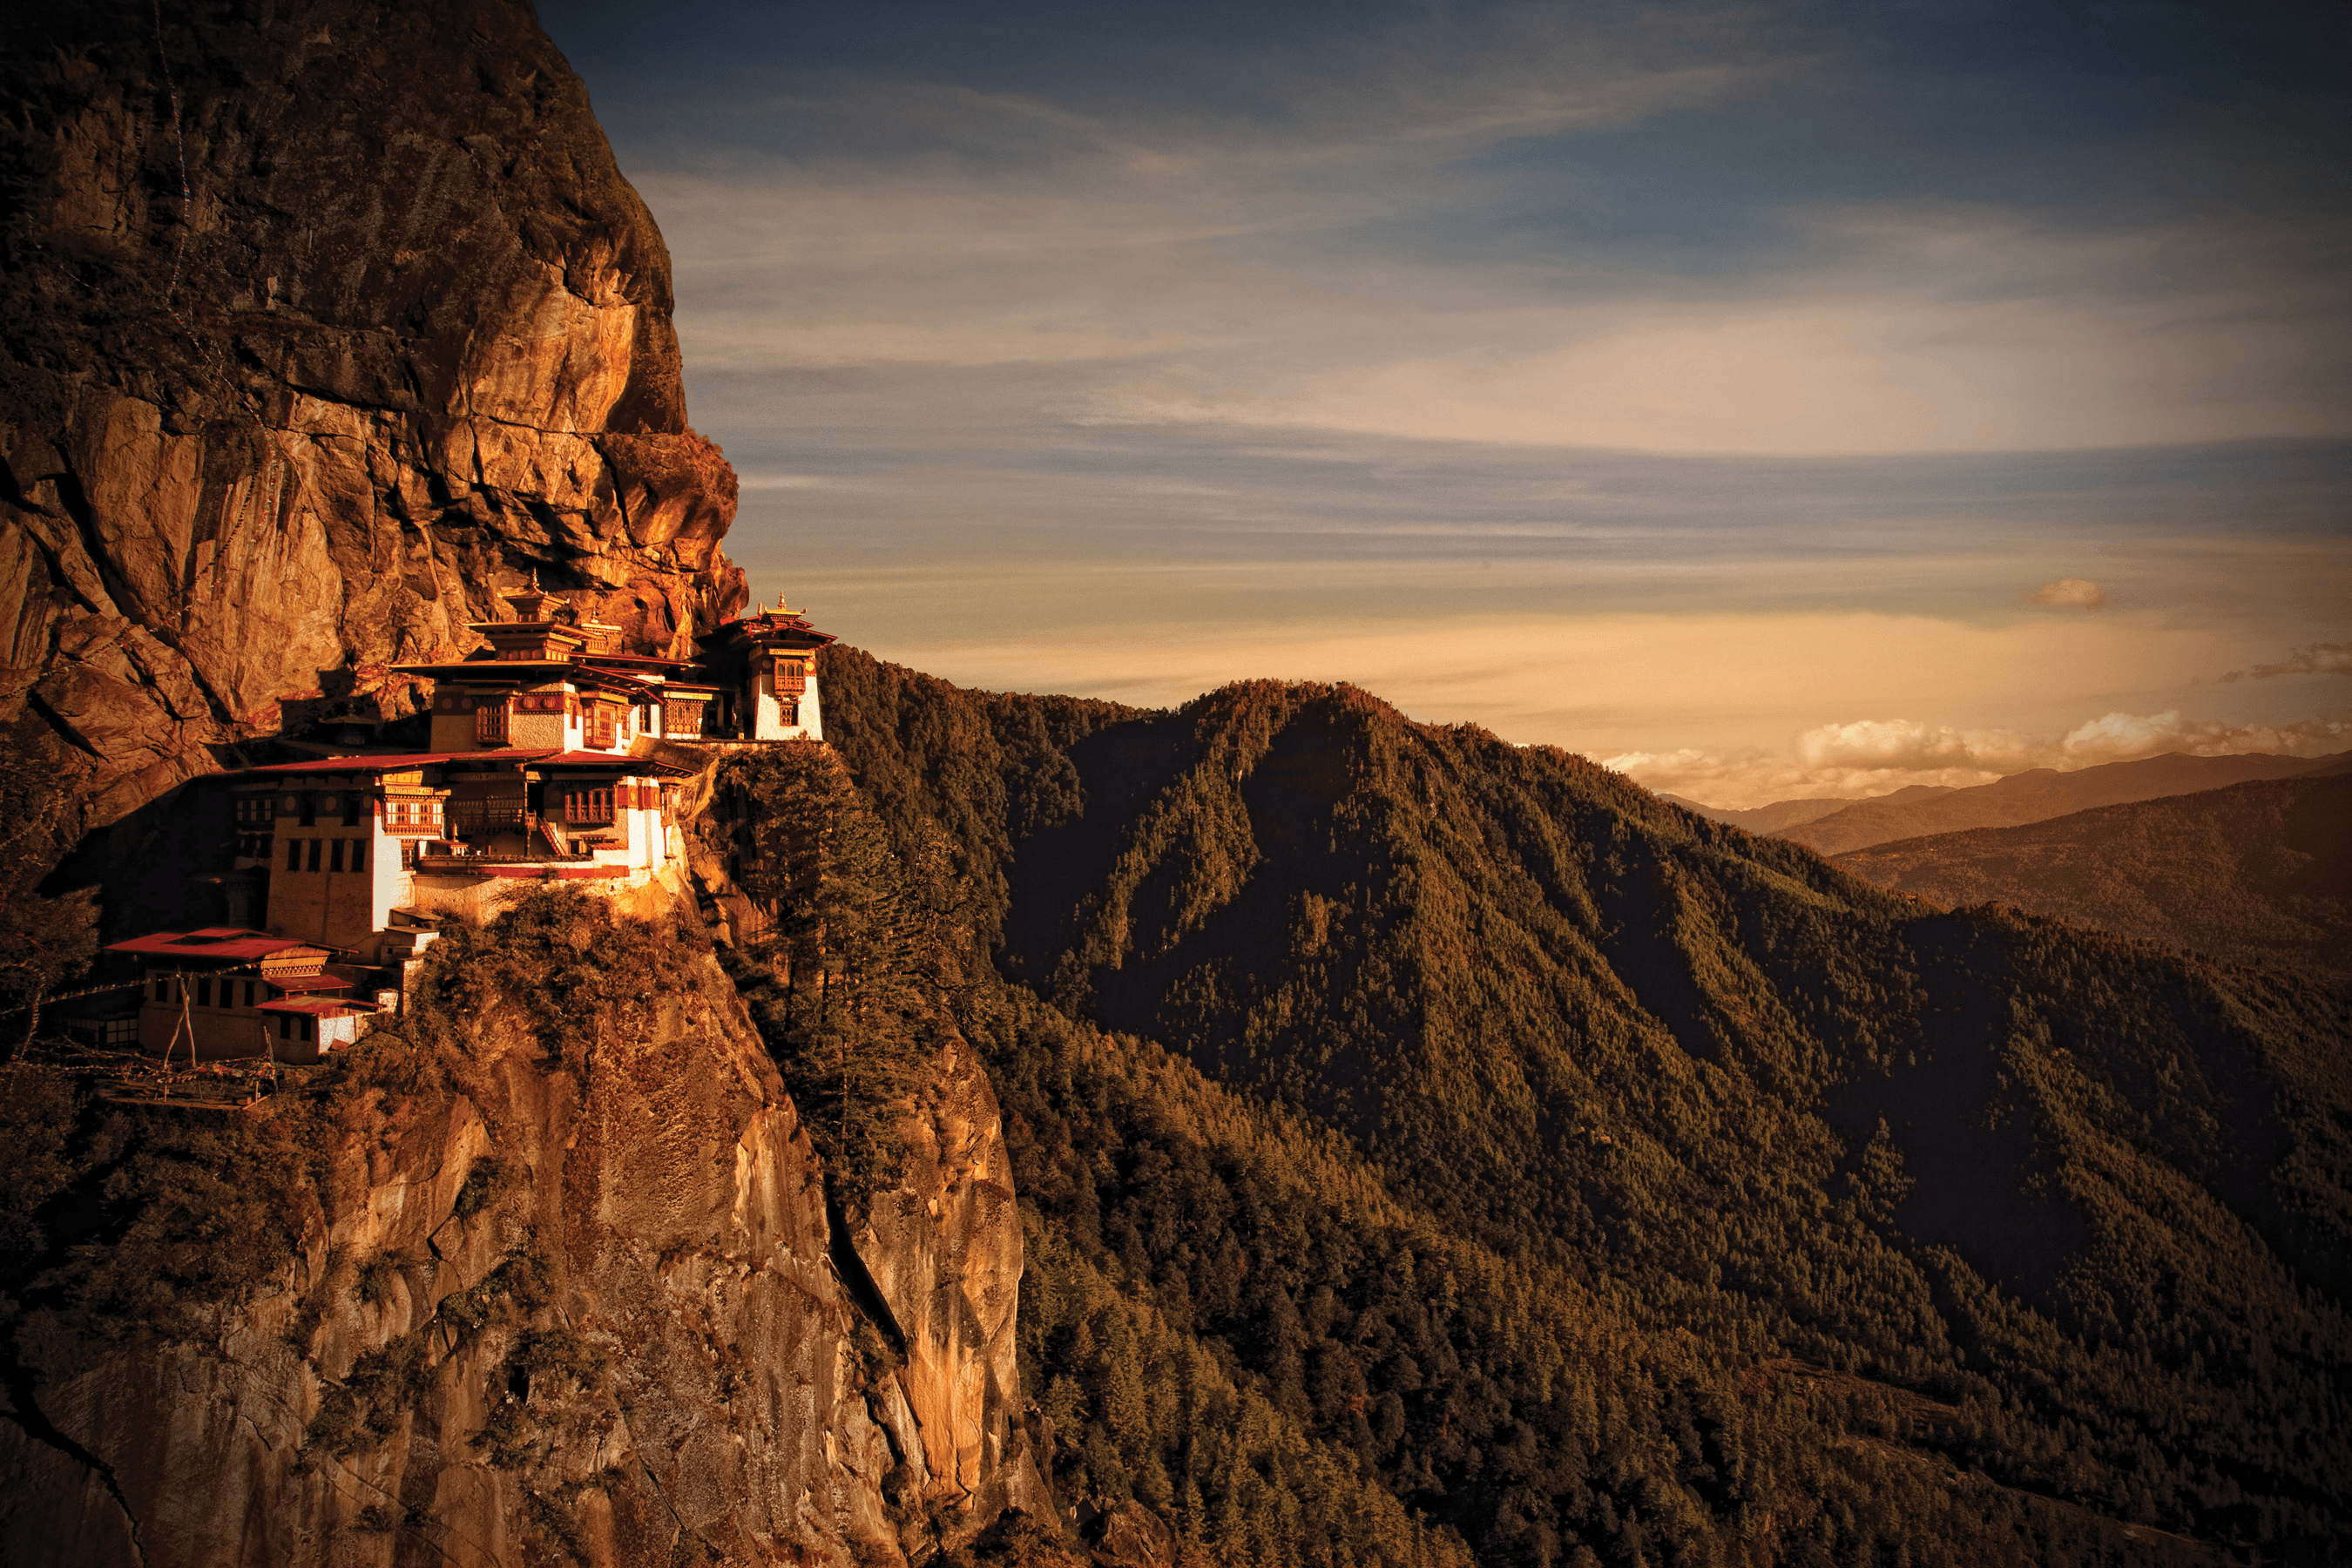 The Tiger's Nest (Paro Taktsang), Paro Valley, Bhutan. Fantastic